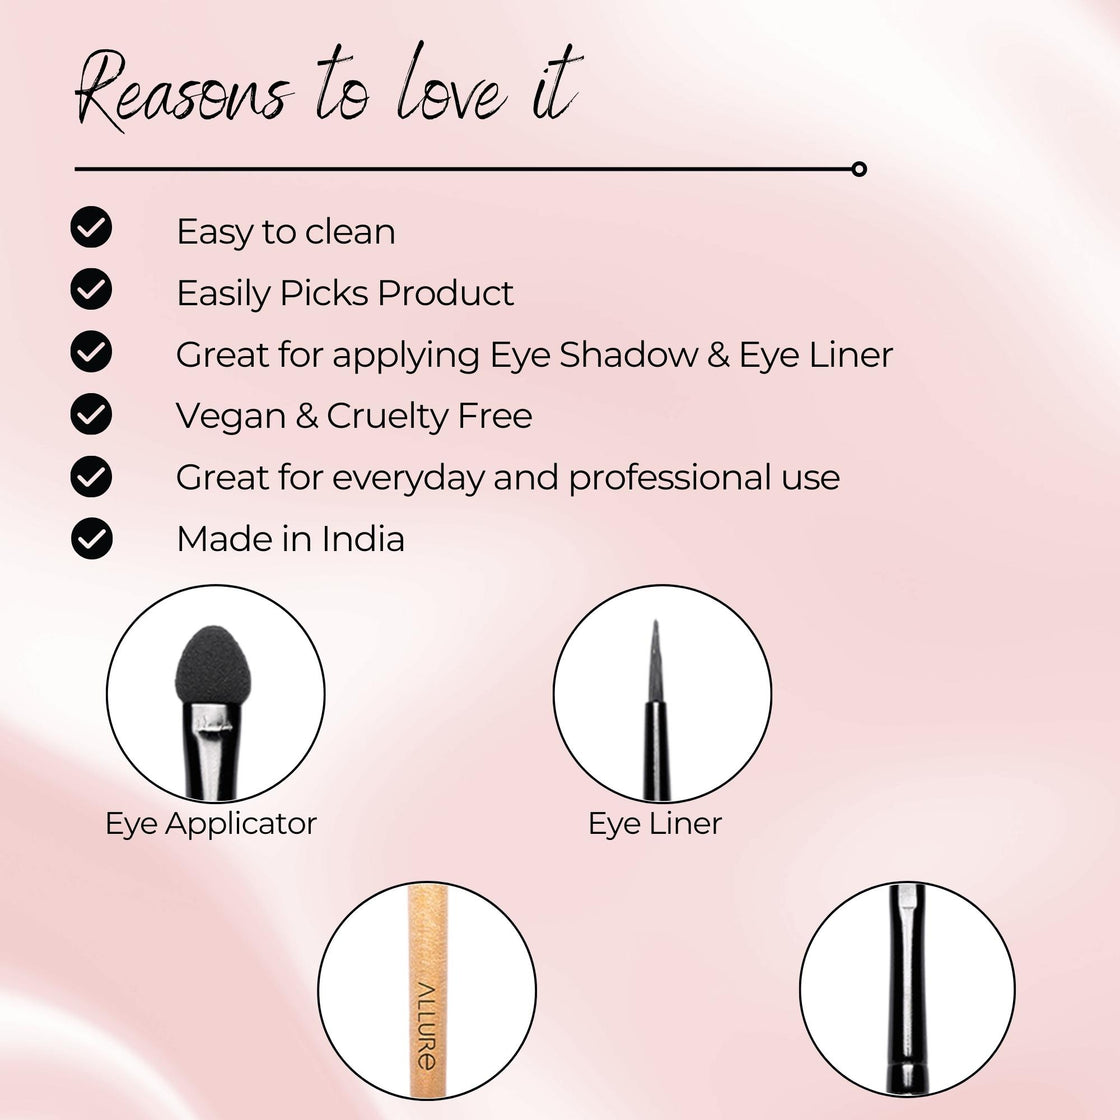 Allure Eye Liner and Eye Applicator Makeup Brushes